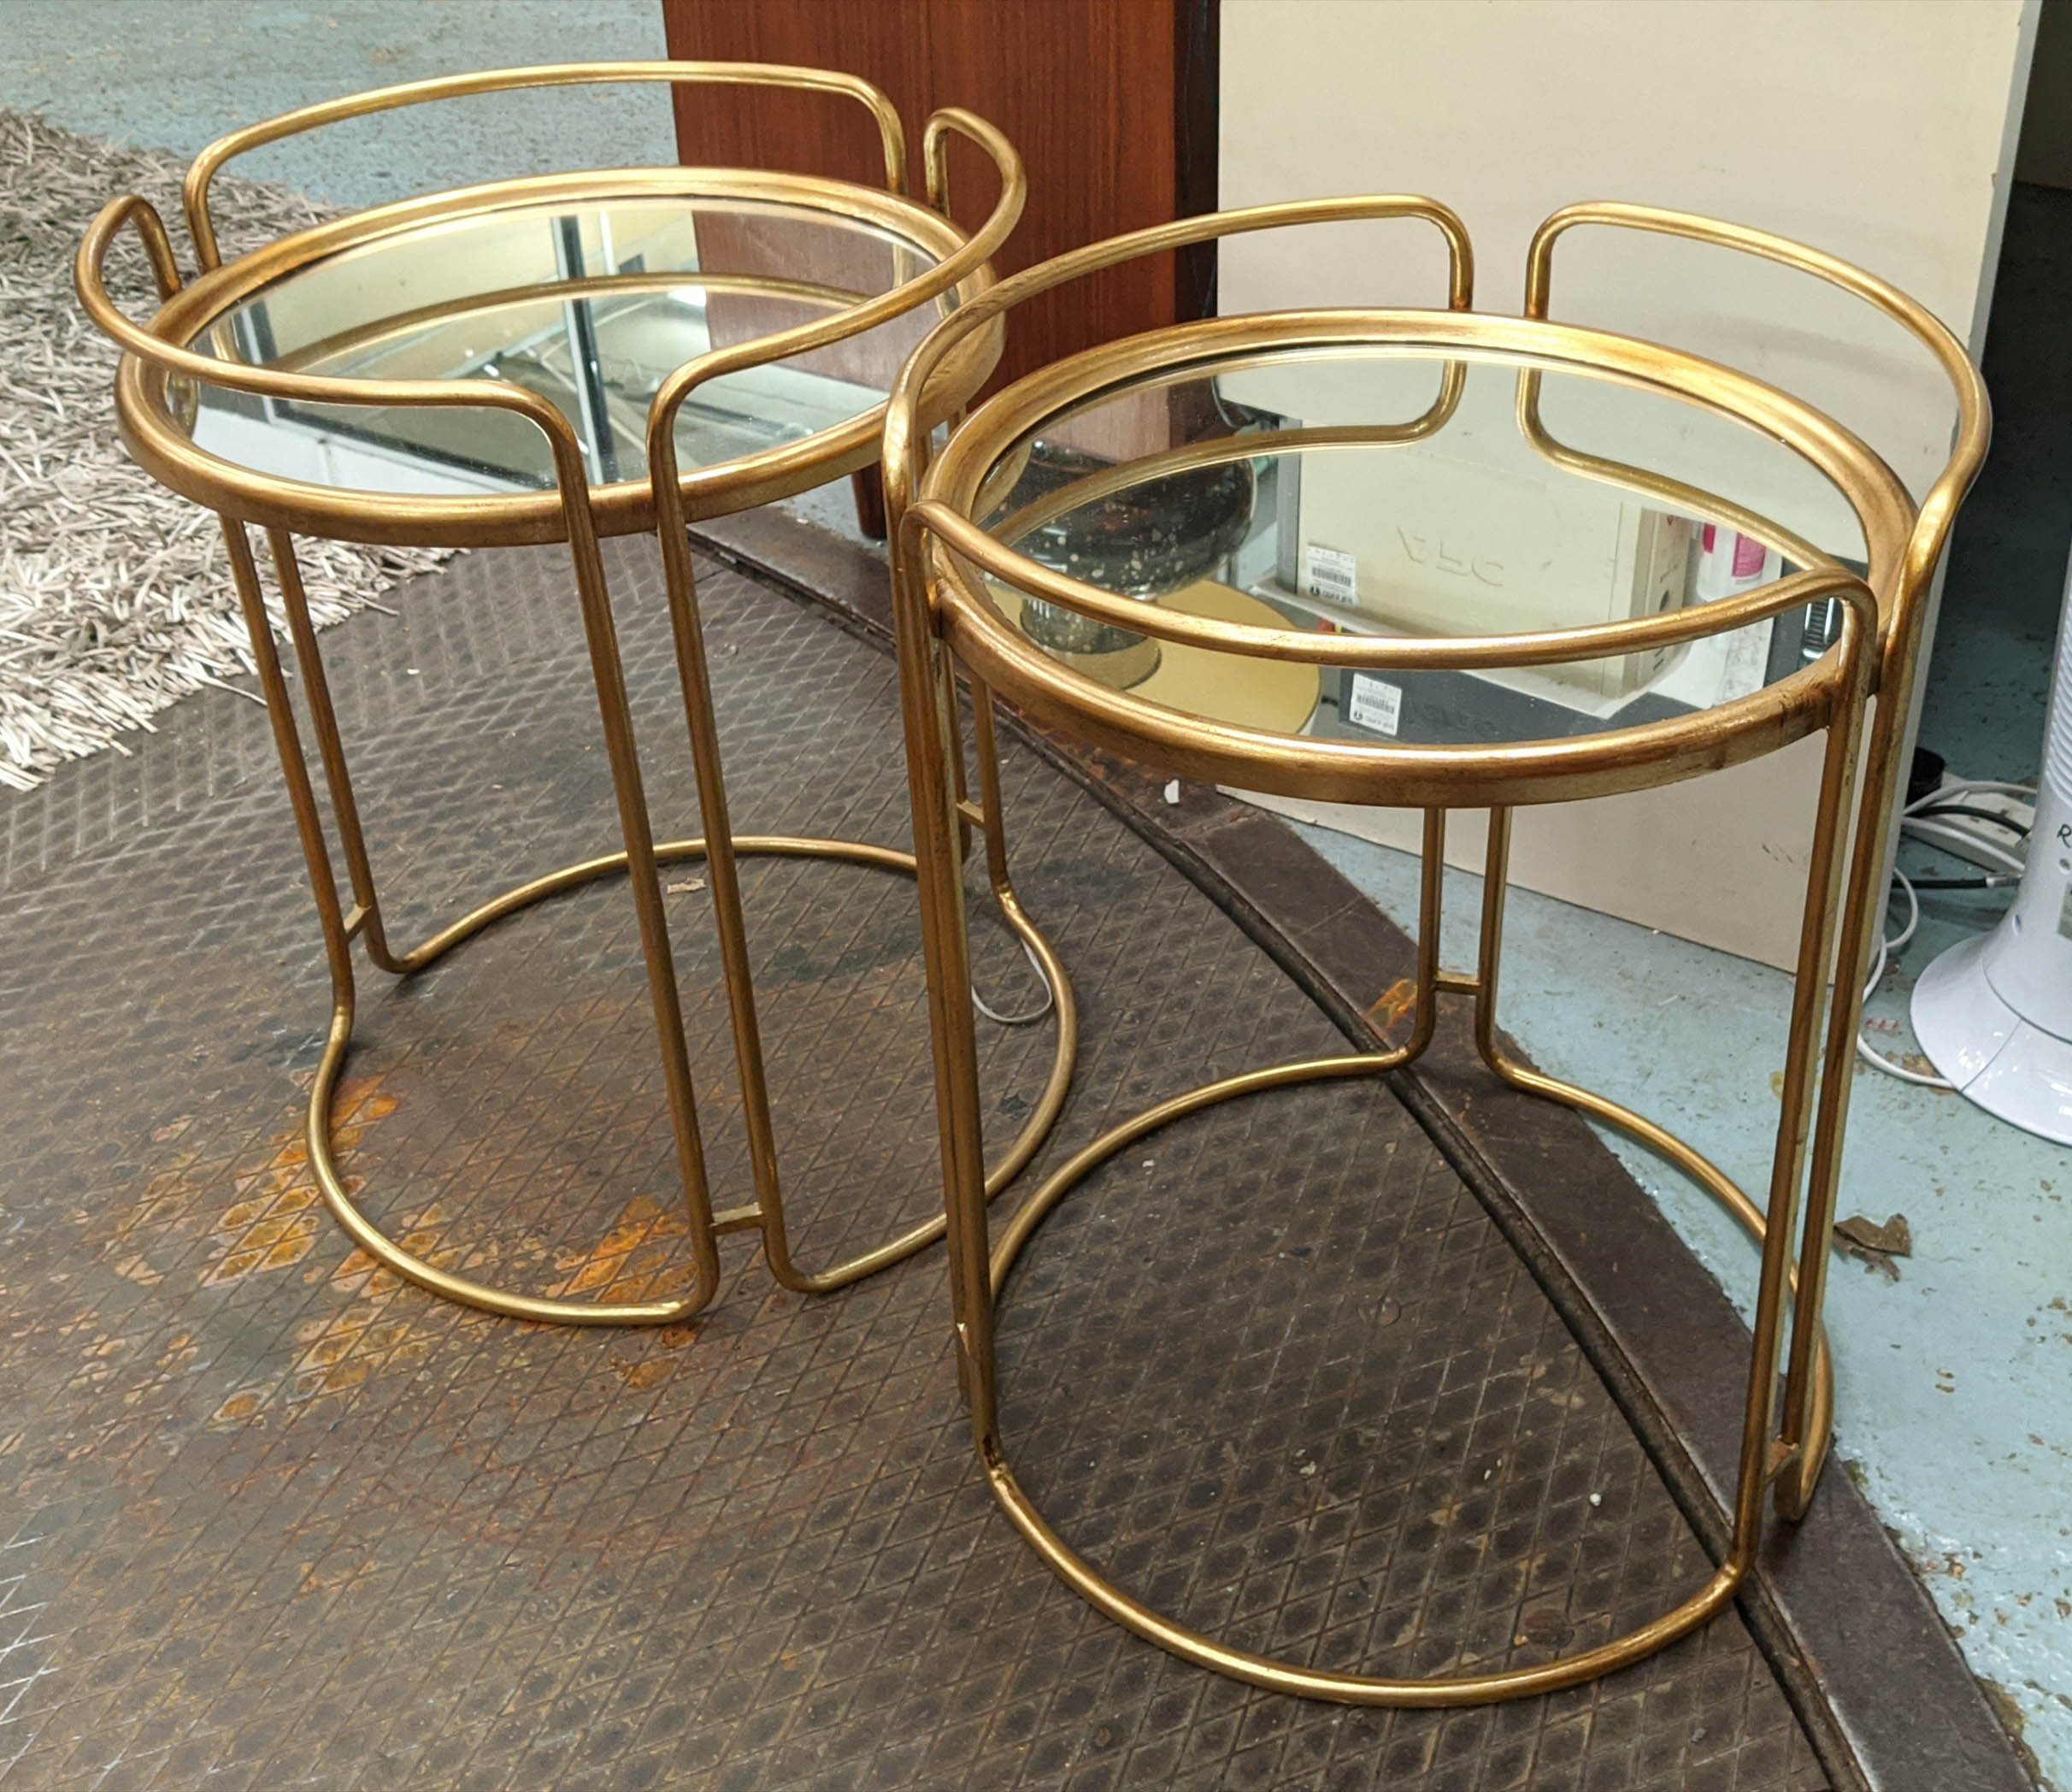 SIDE TABLES, a pair, 64cm x 48cm diam., 1970s Italian style, gilt metal, mirrored top. (2) - Bild 3 aus 7